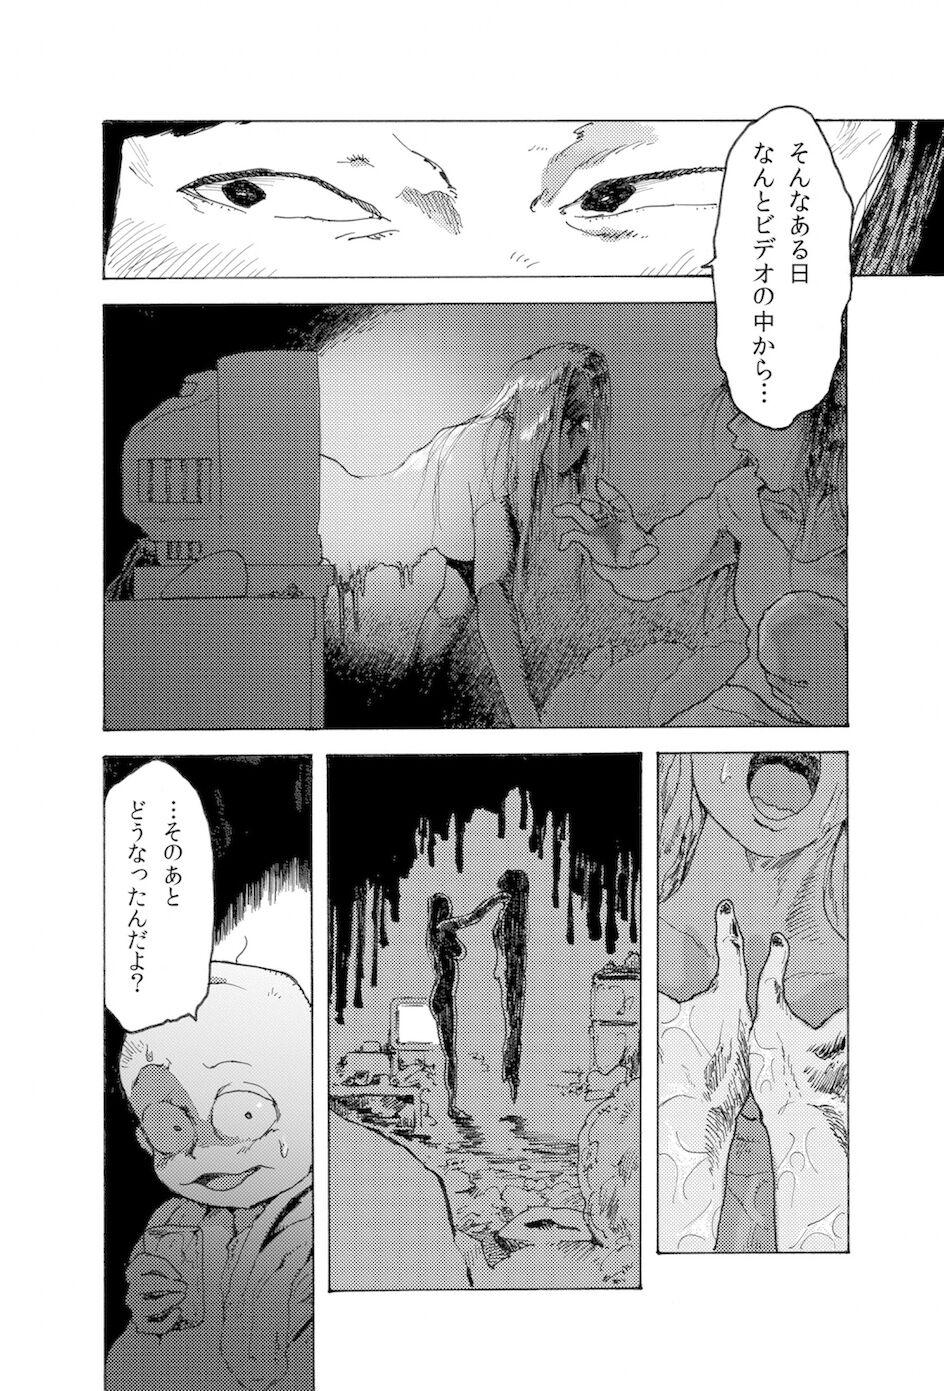 Cam Sex [Koshigerunasunibusu] WEB Sairoku [R18G] 'AIN'T SIX IS DEATH' - Osomatsu-san Aunt - Page 3